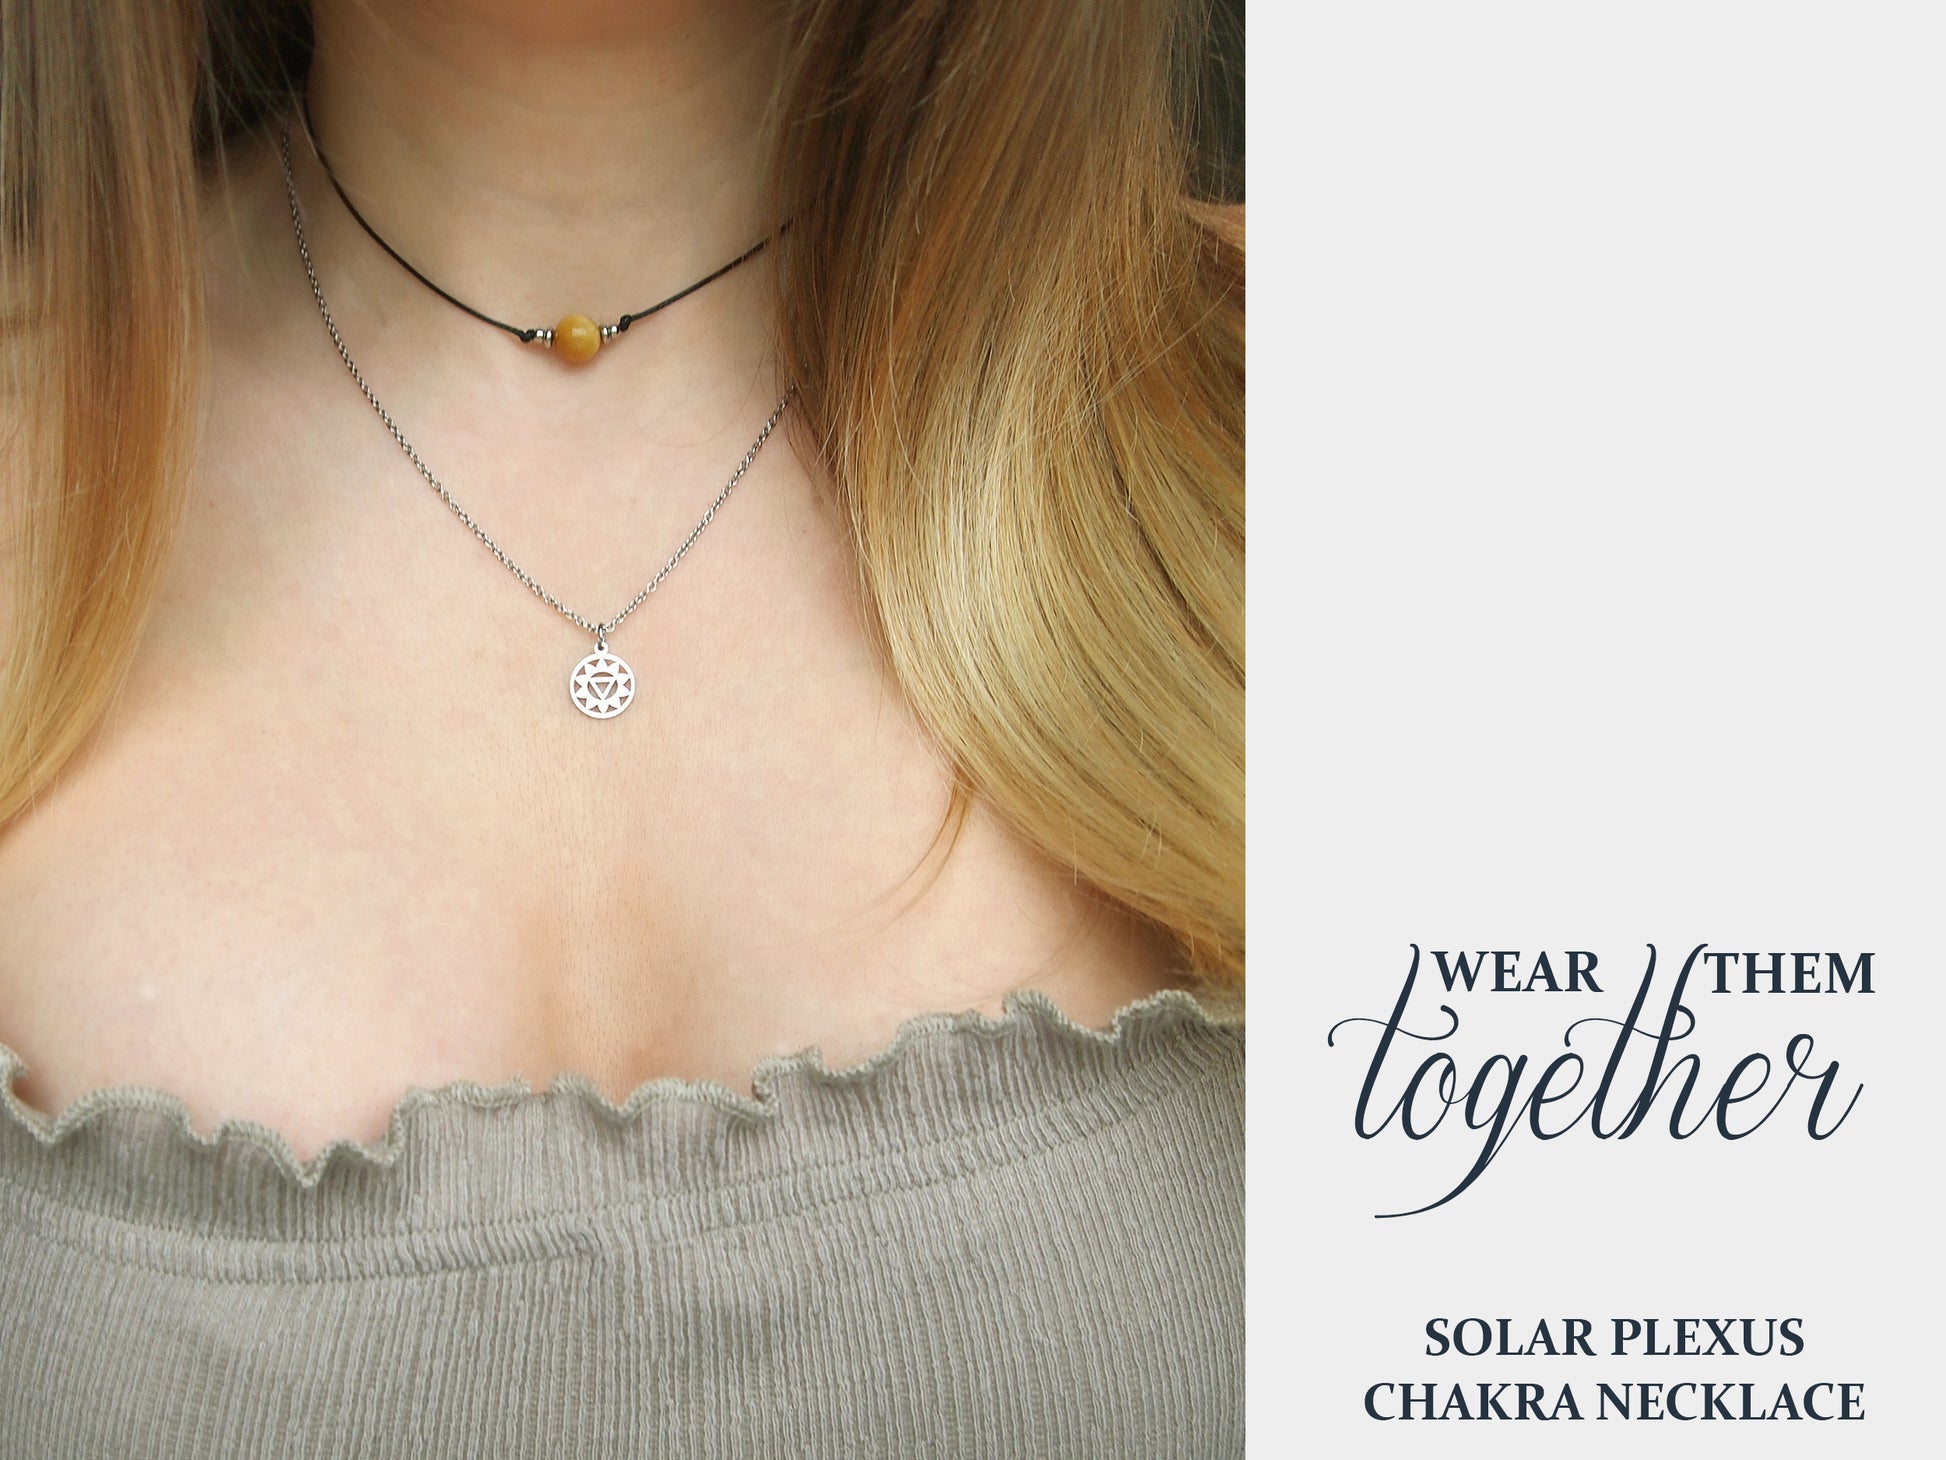 solar plexus chakra necklace, solar plexus crystals